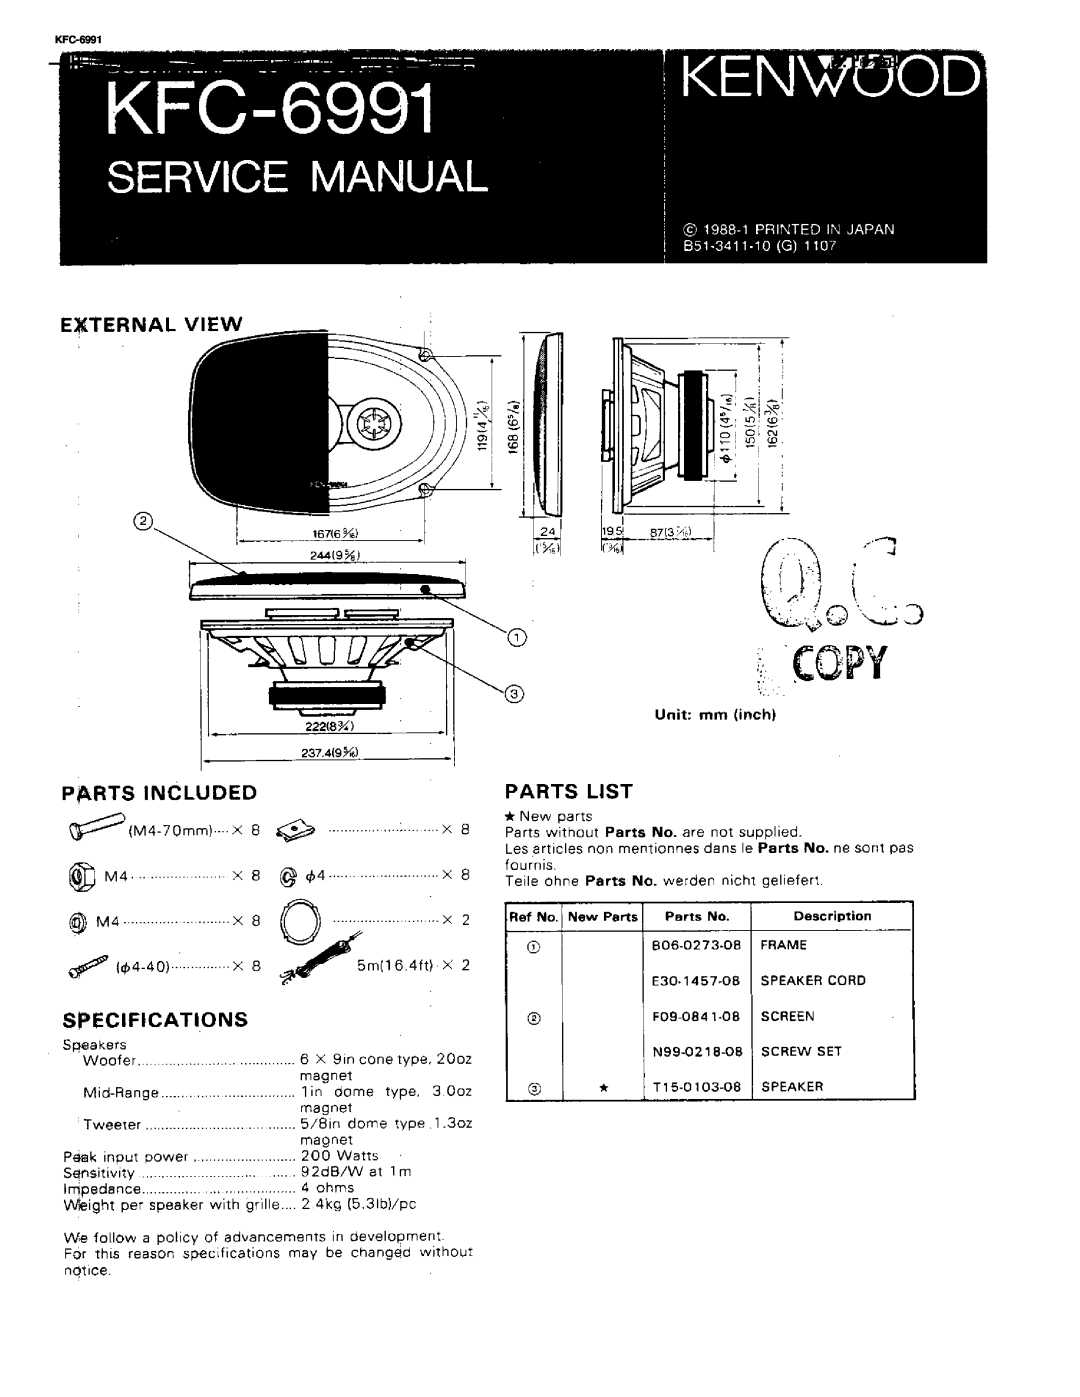 Kenwood KFC-6991 manual 